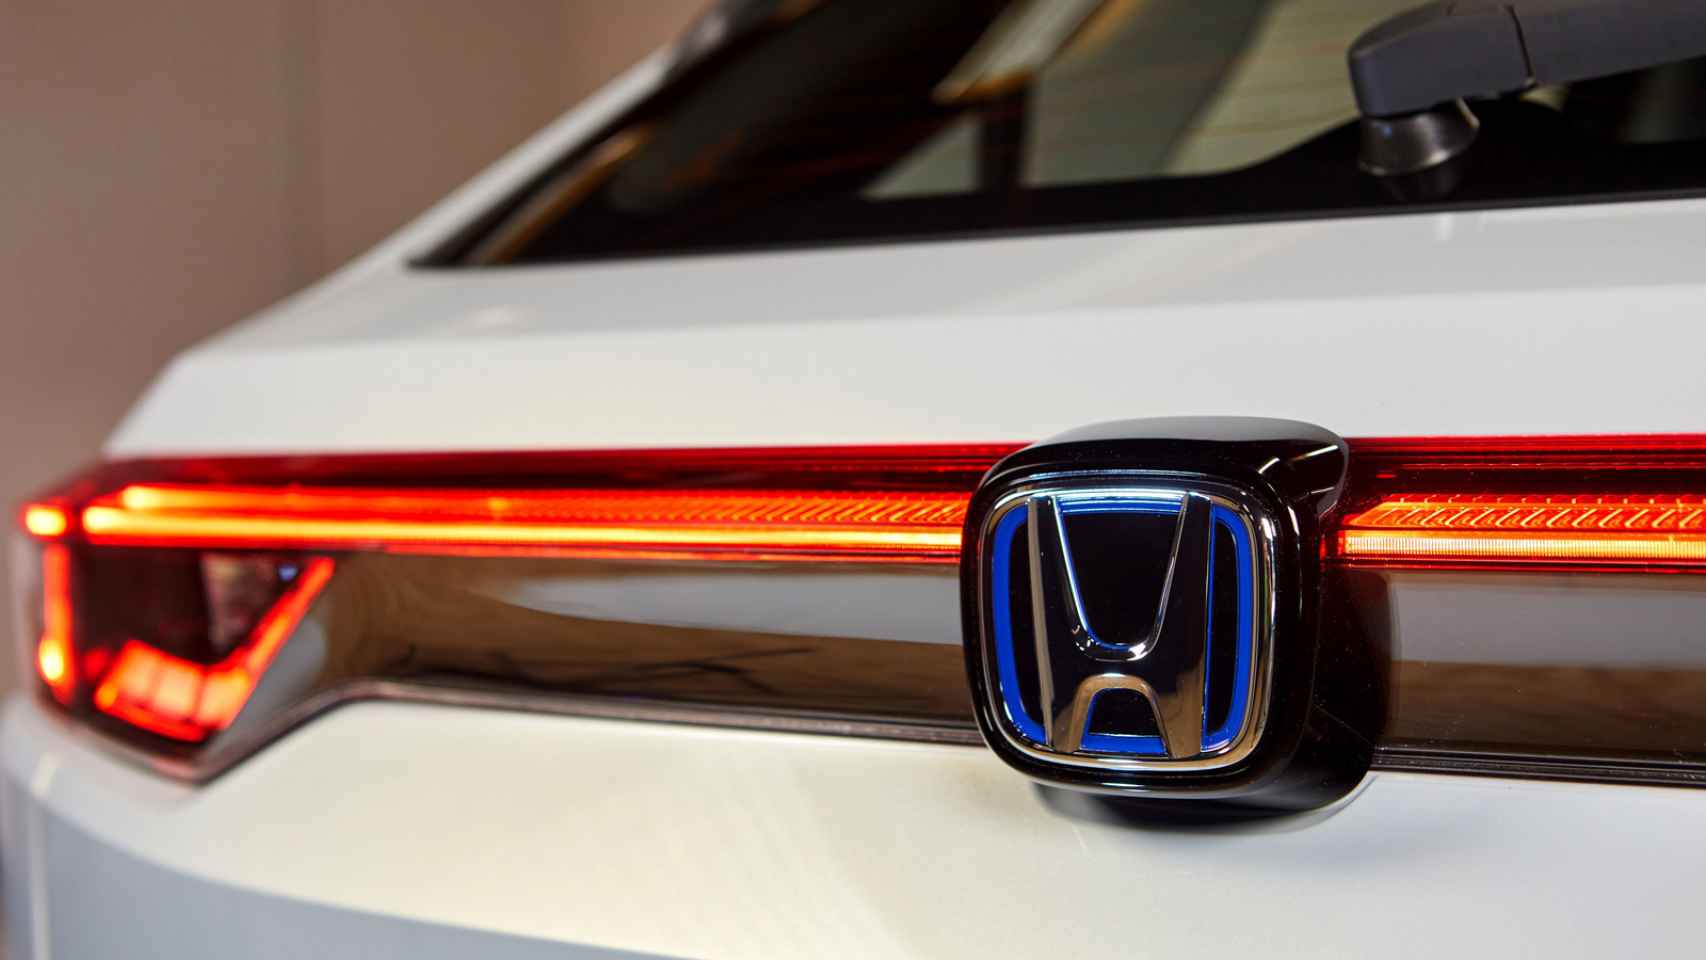 Zaga del nuevo Honda HR-V.